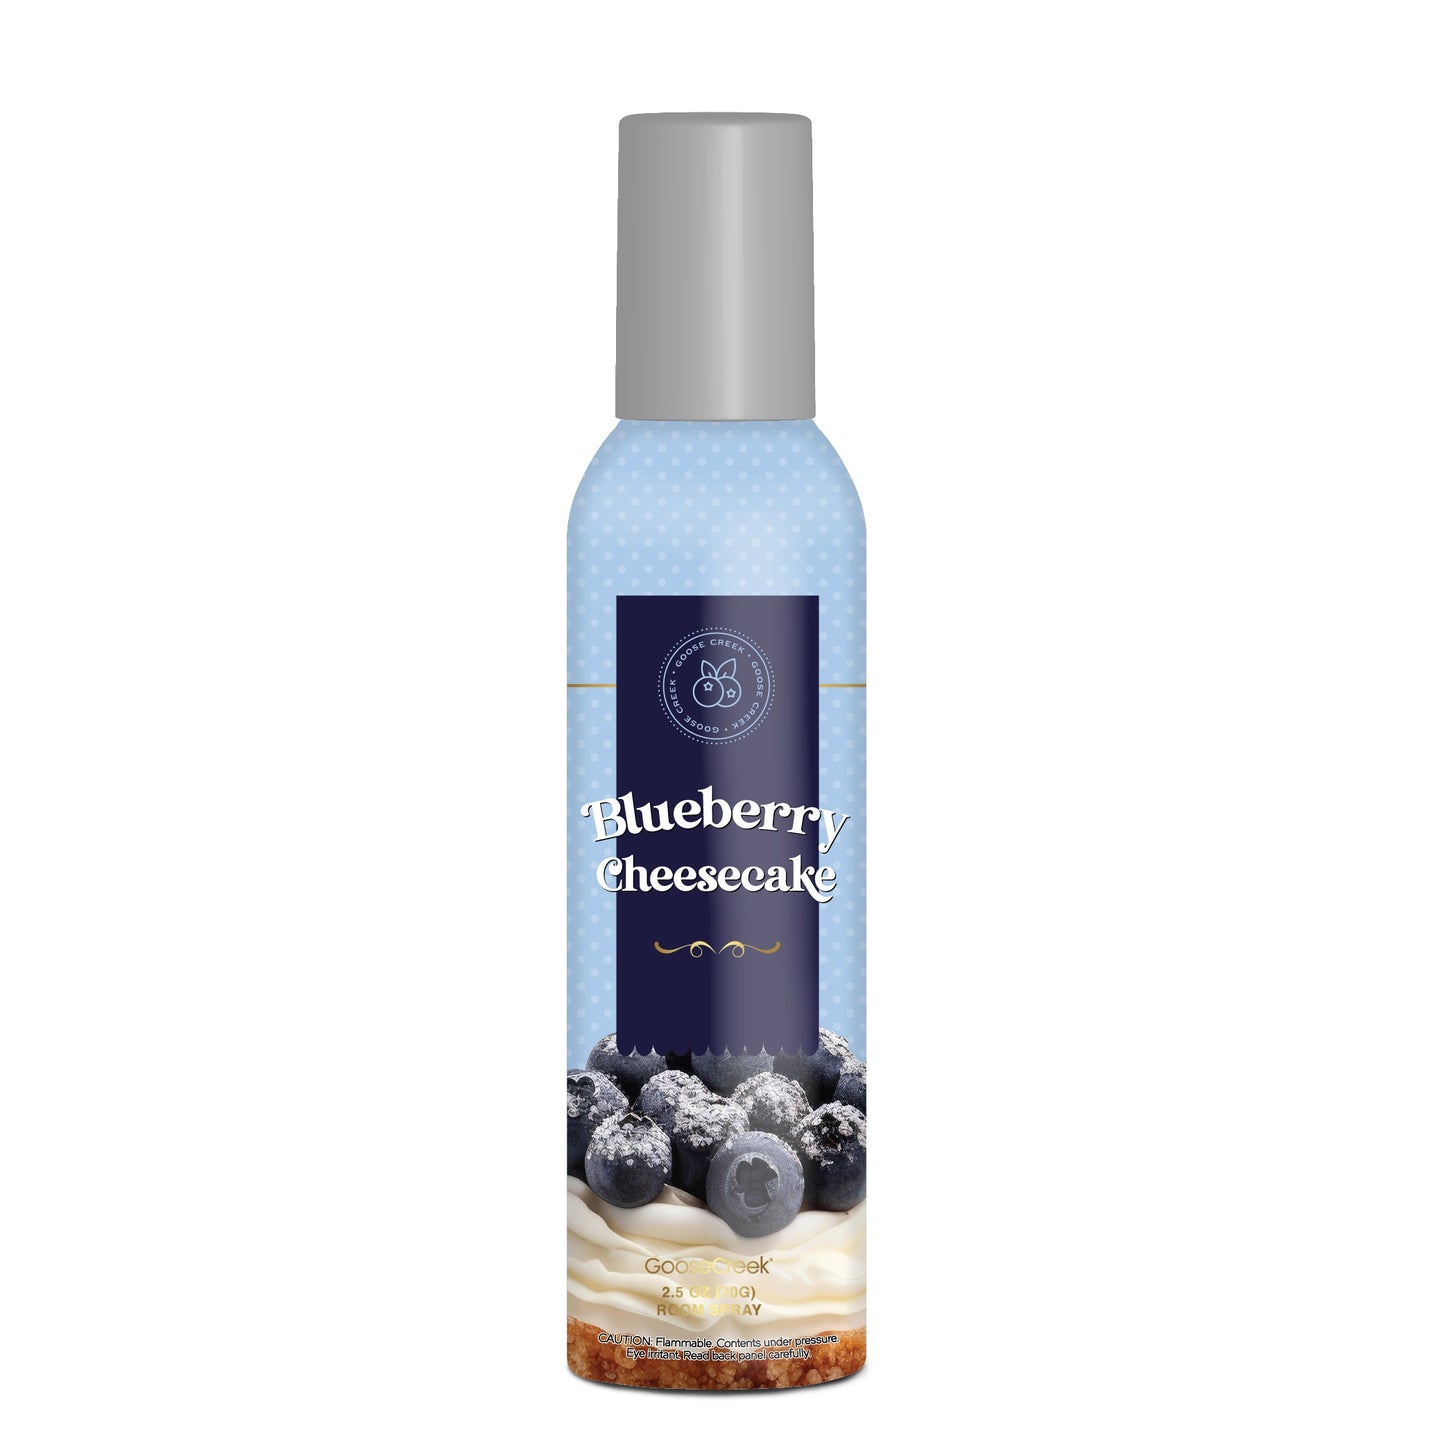 Blueberry Cheesecake Room Spray